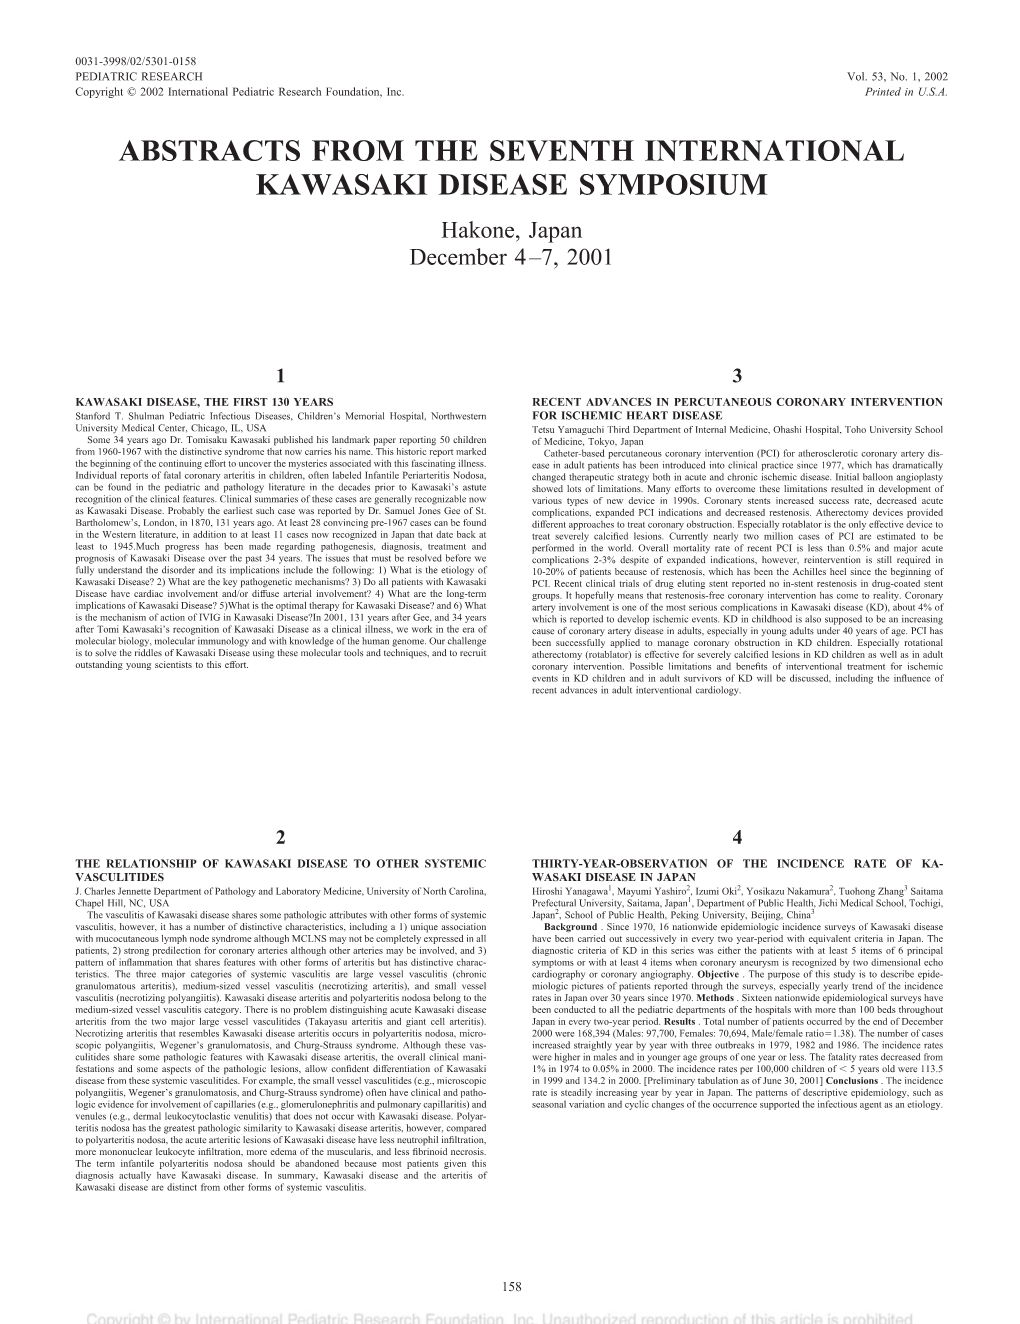 ABSTRACTS from the SEVENTH INTERNATIONAL KAWASAKI DISEASE SYMPOSIUM Hakone, Japan December 4–7, 2001